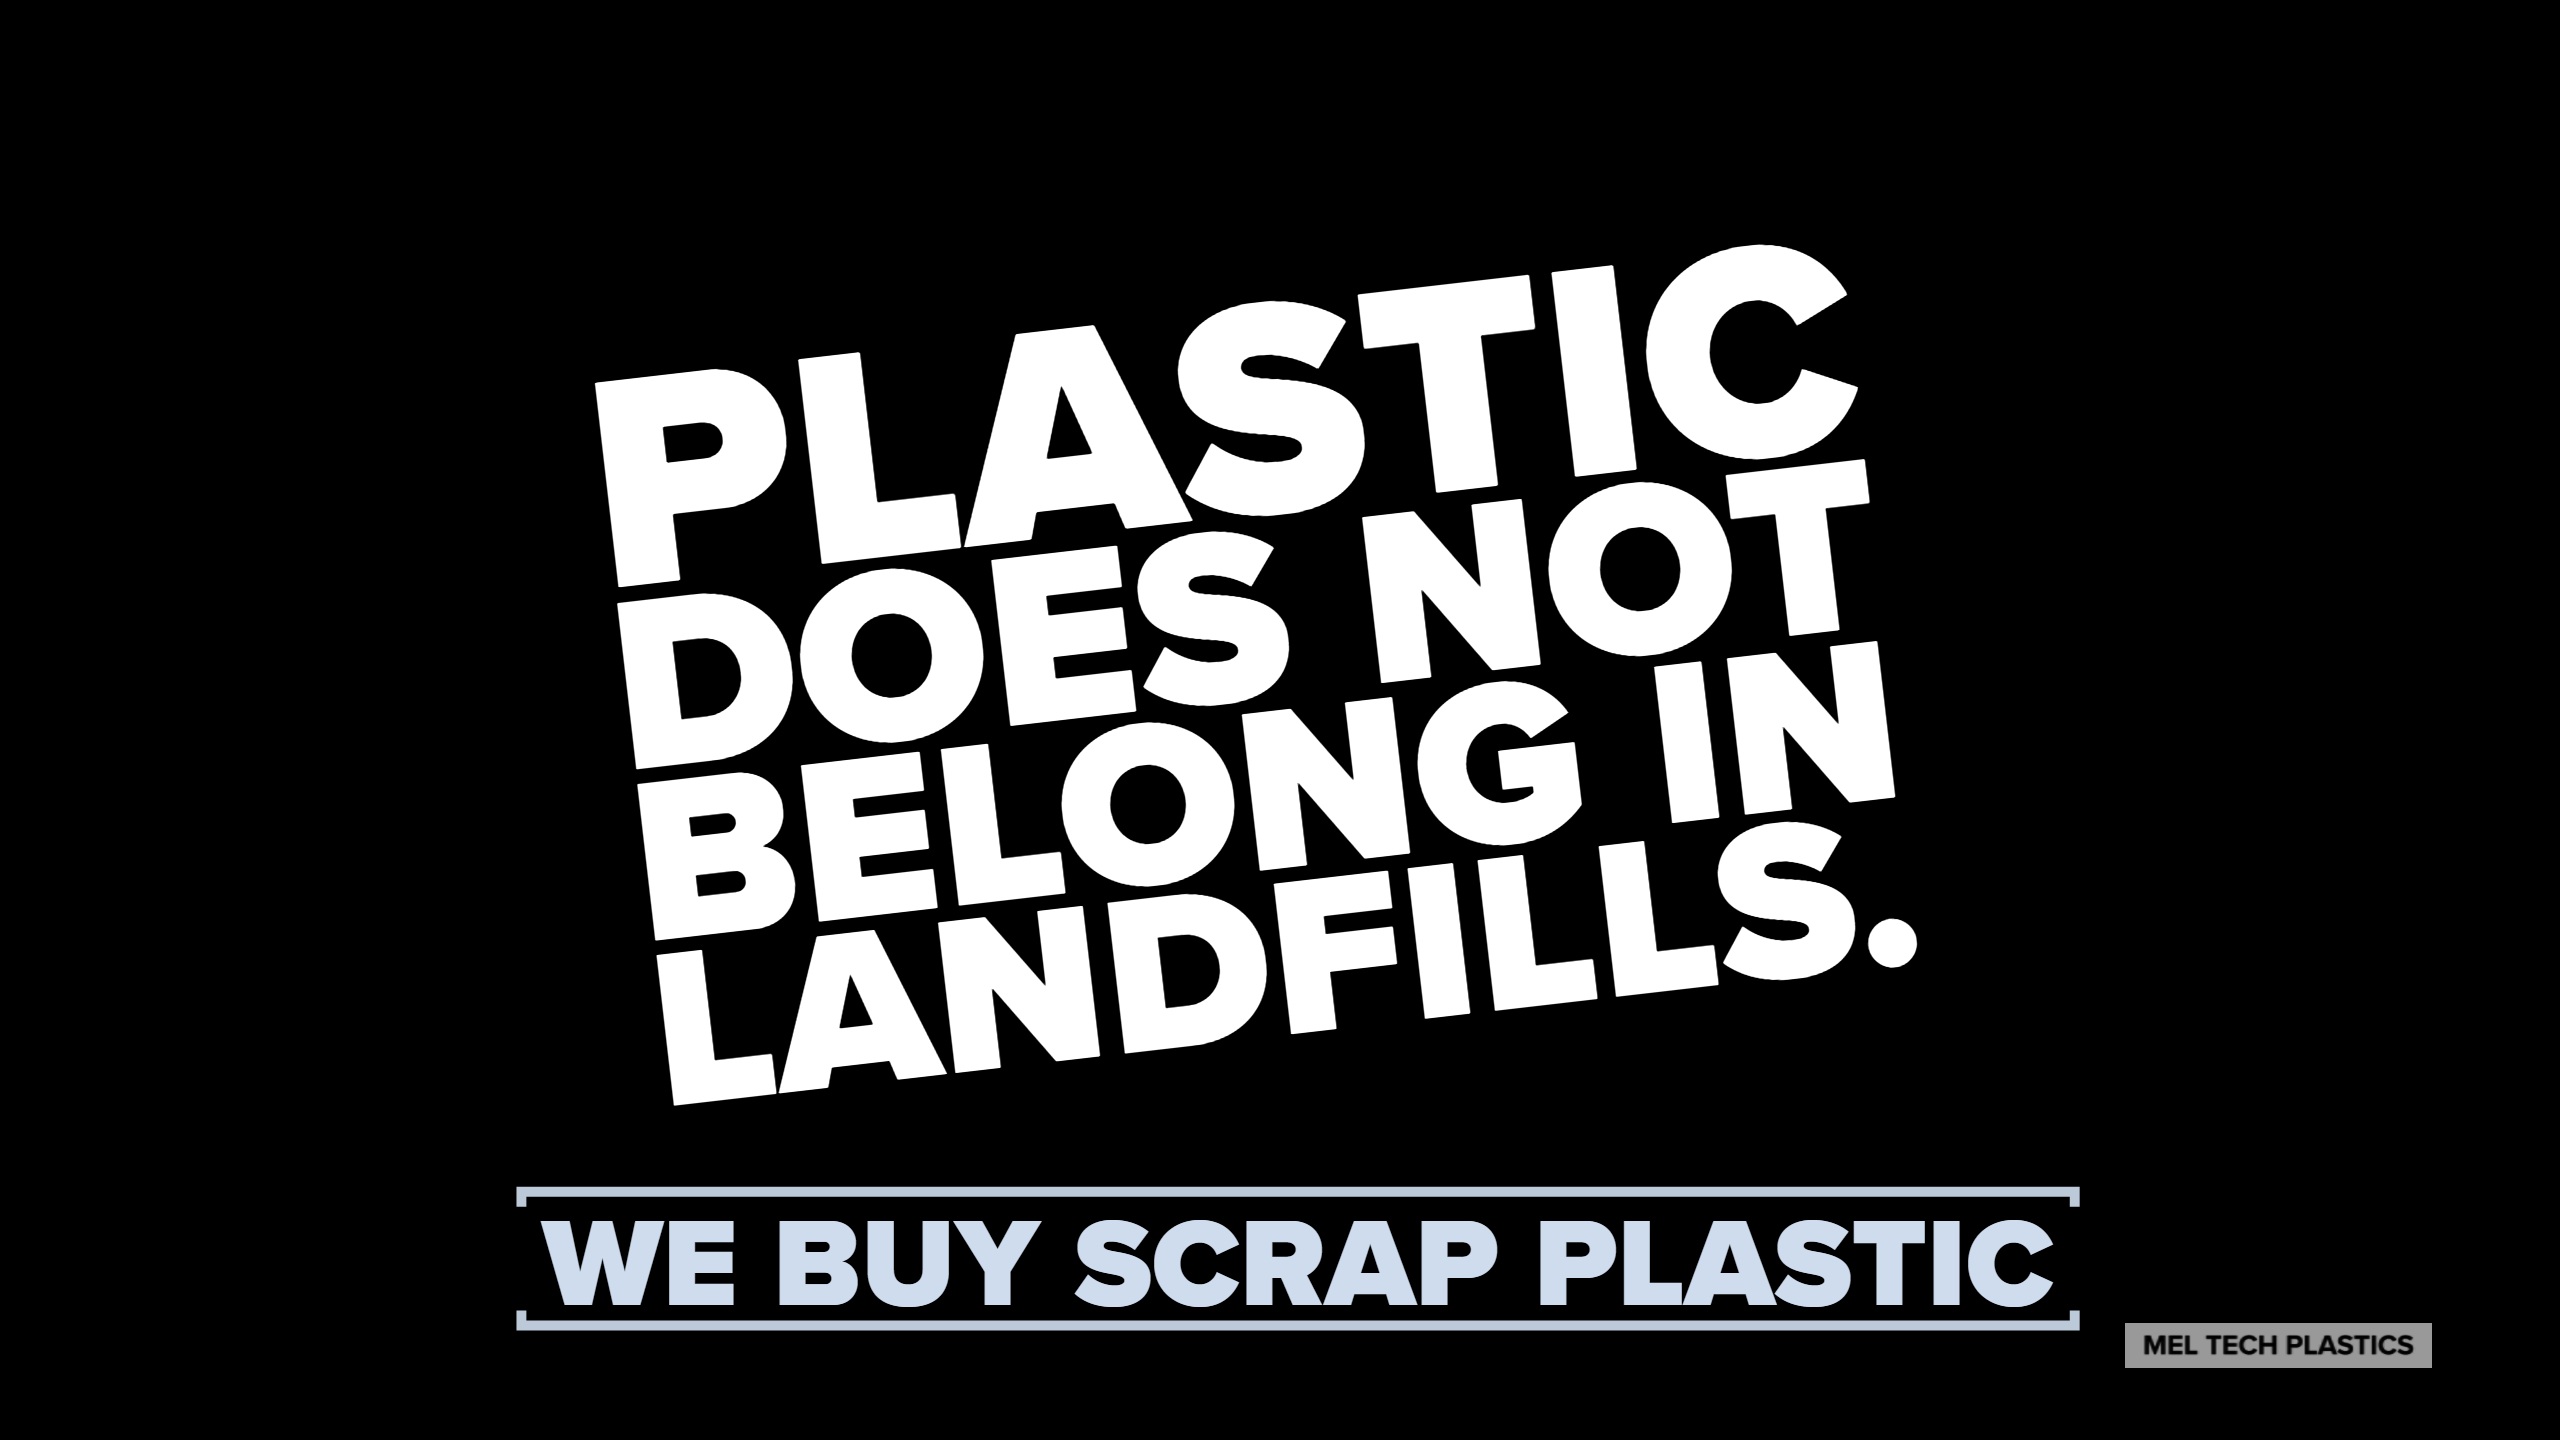 Plastics Does Not Belong in Landfills